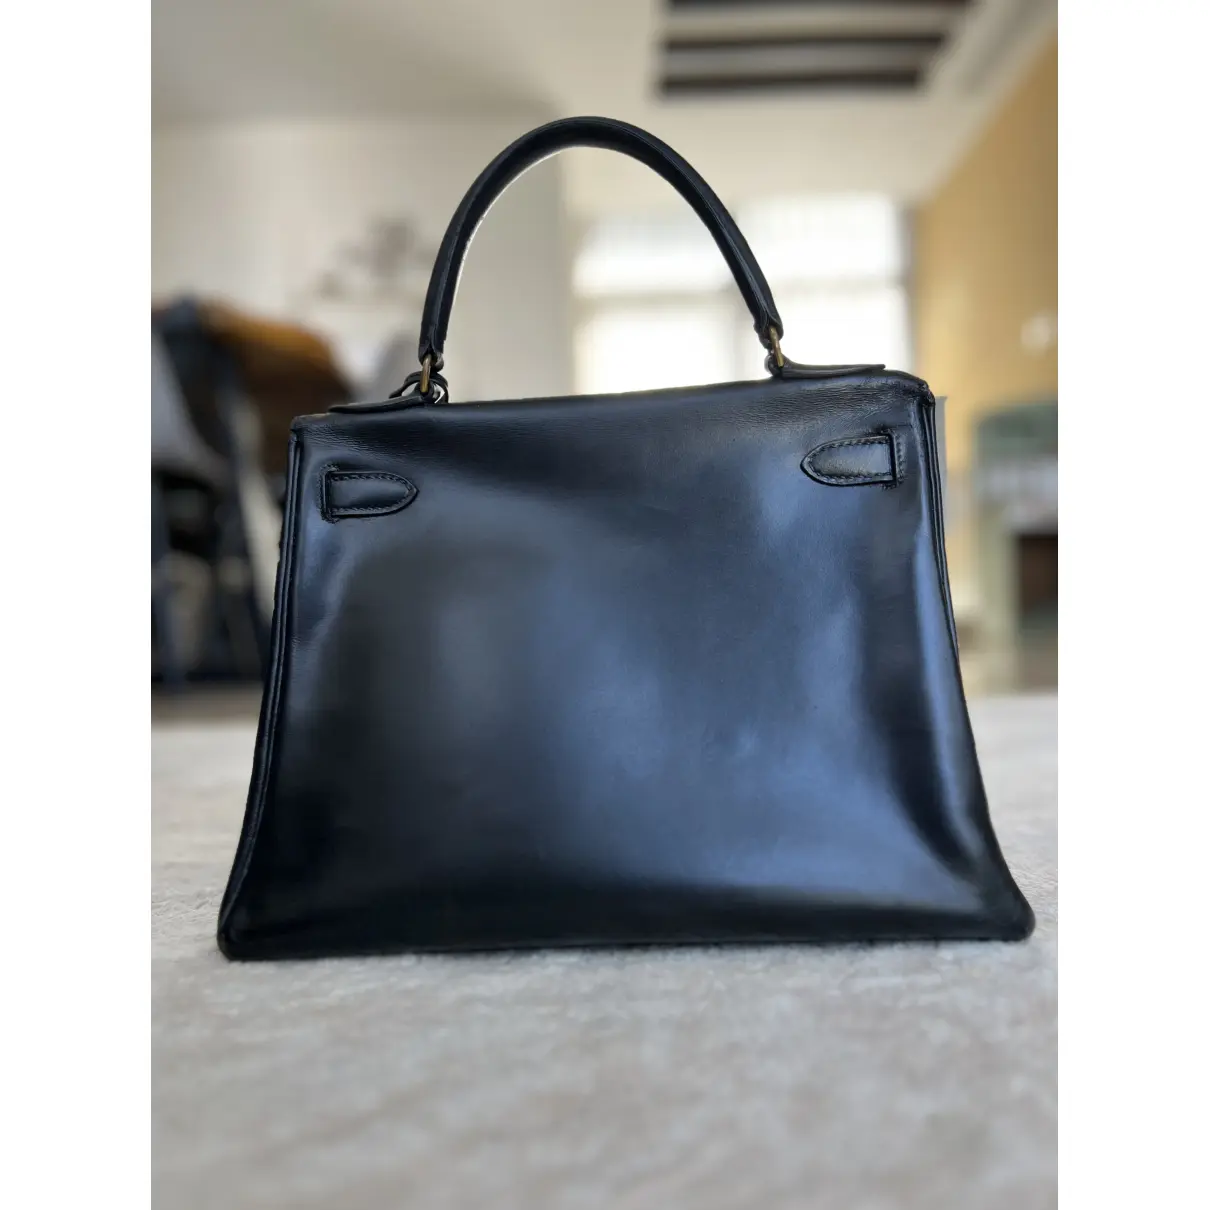 Buy Hermès Kelly 28 leather handbag online - Vintage